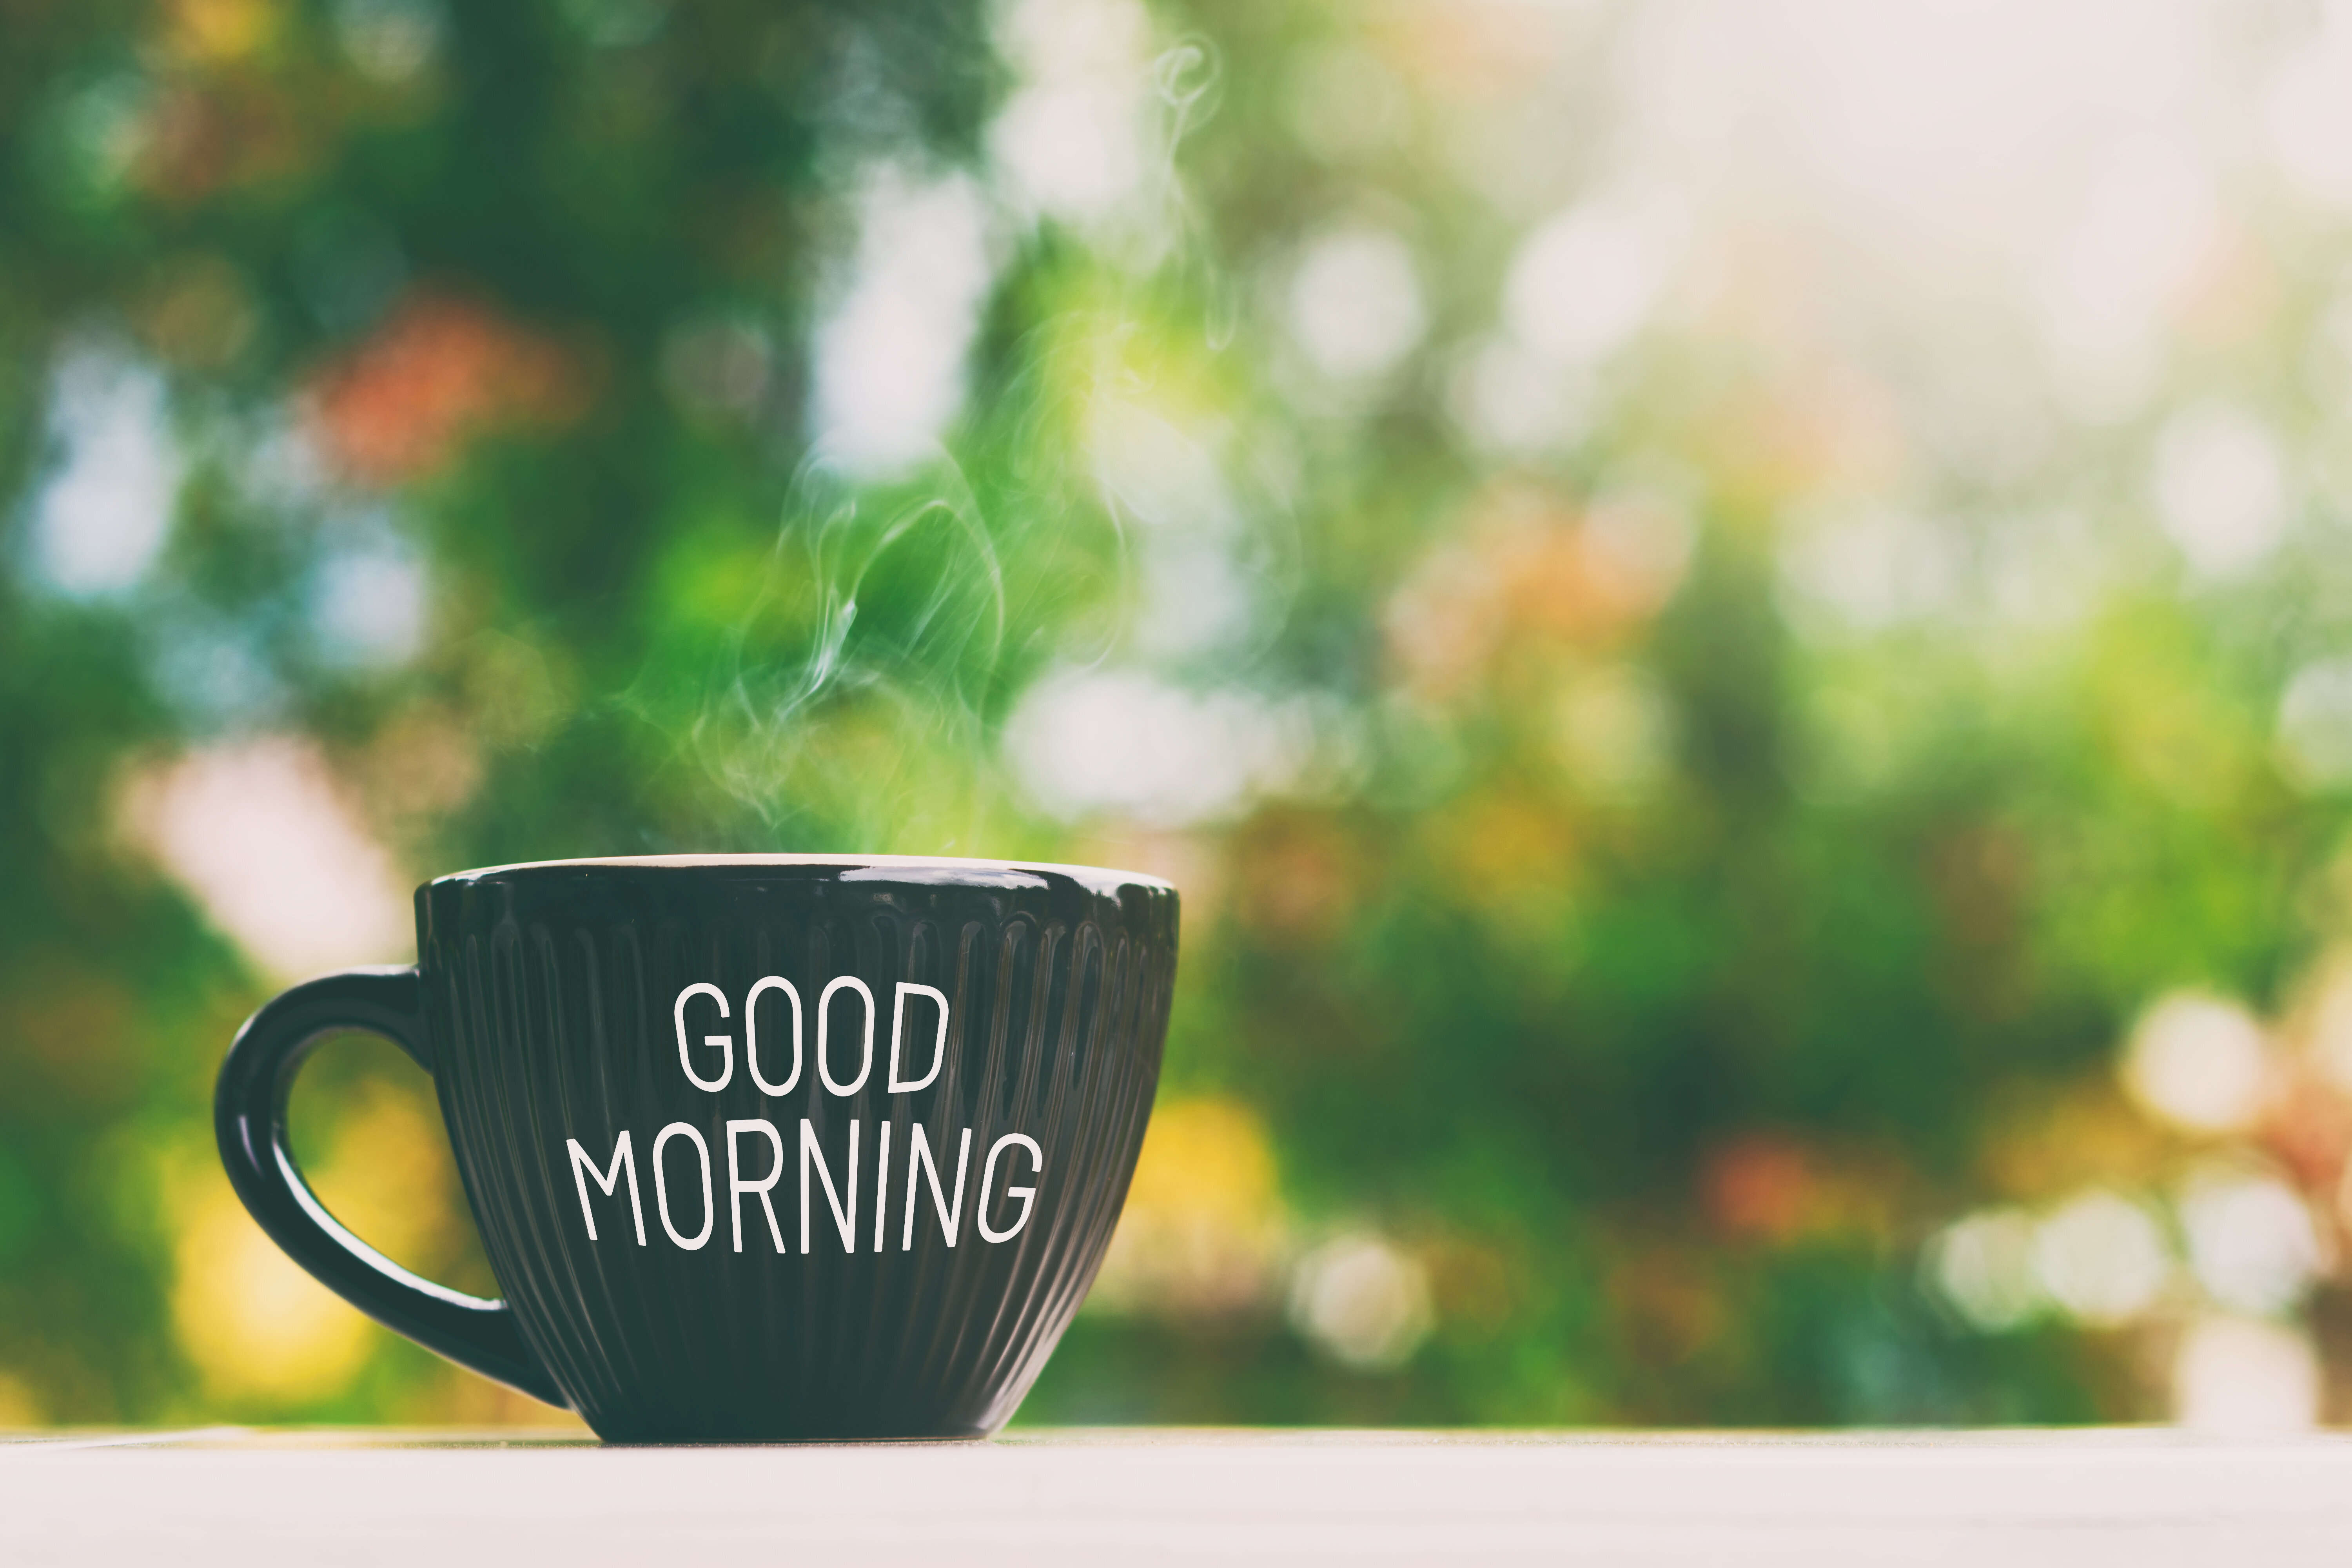 Good morning class. Good morning кофе. Good morning картинки. Утро. Заставка good morning.